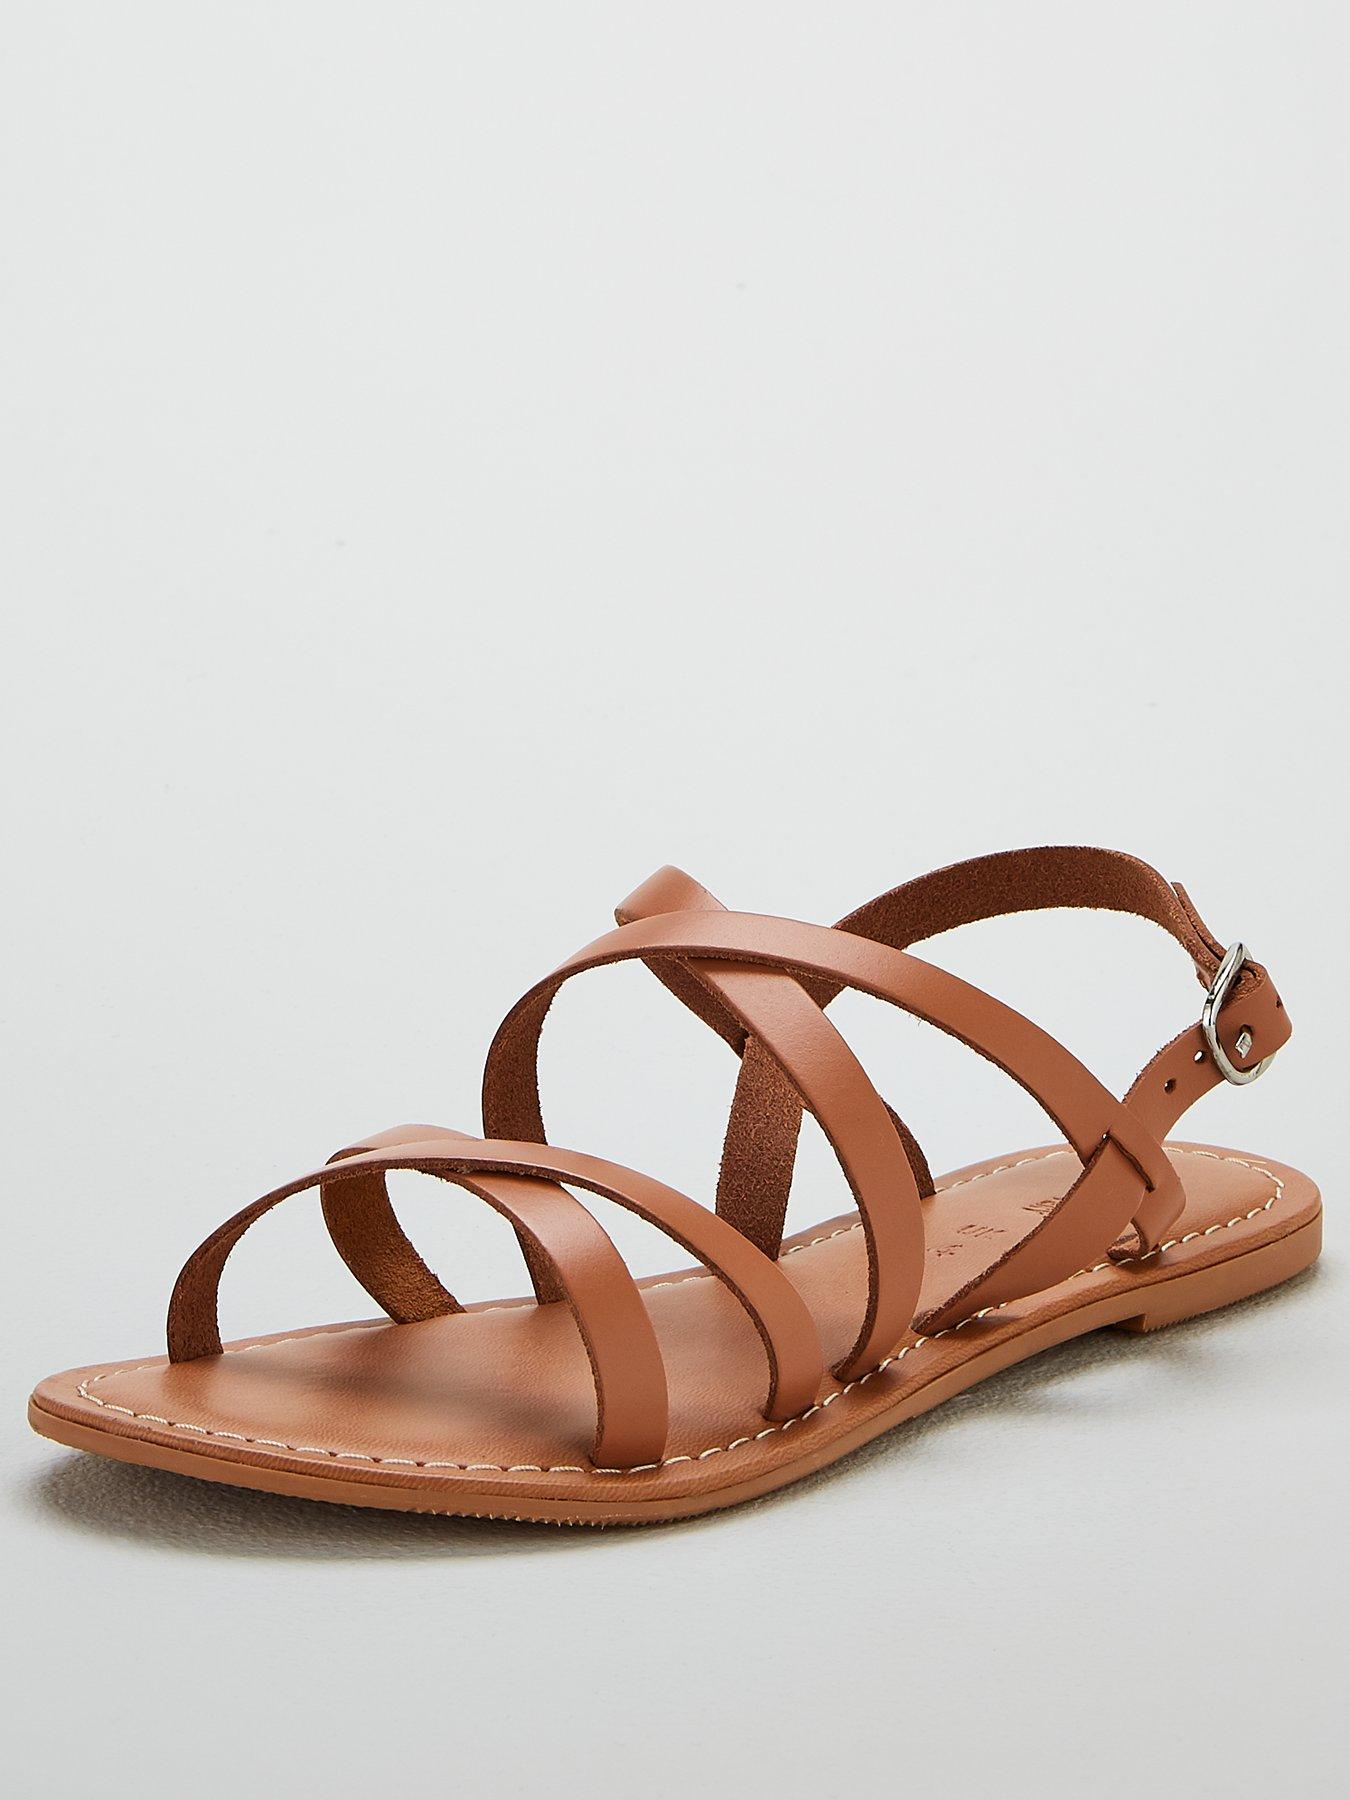 tan strappy sandals flat